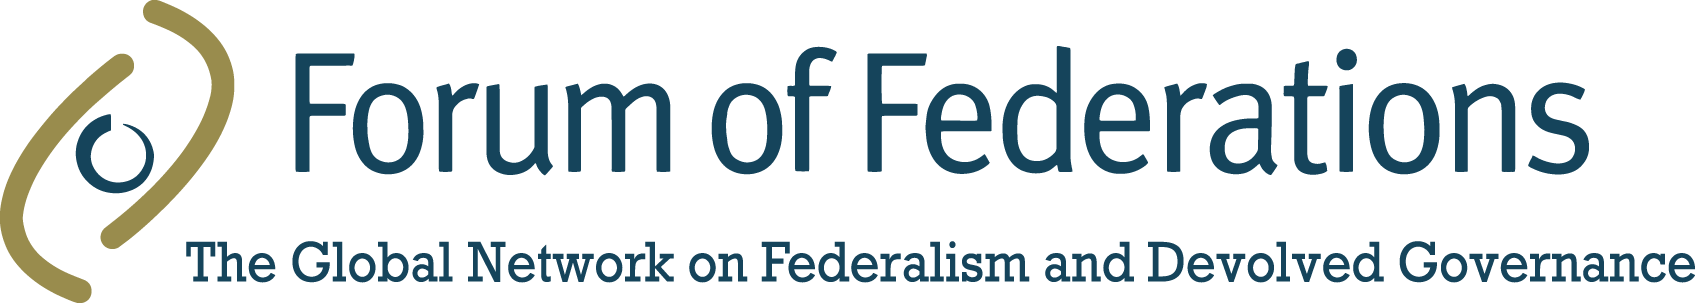 Forum des Federations logo